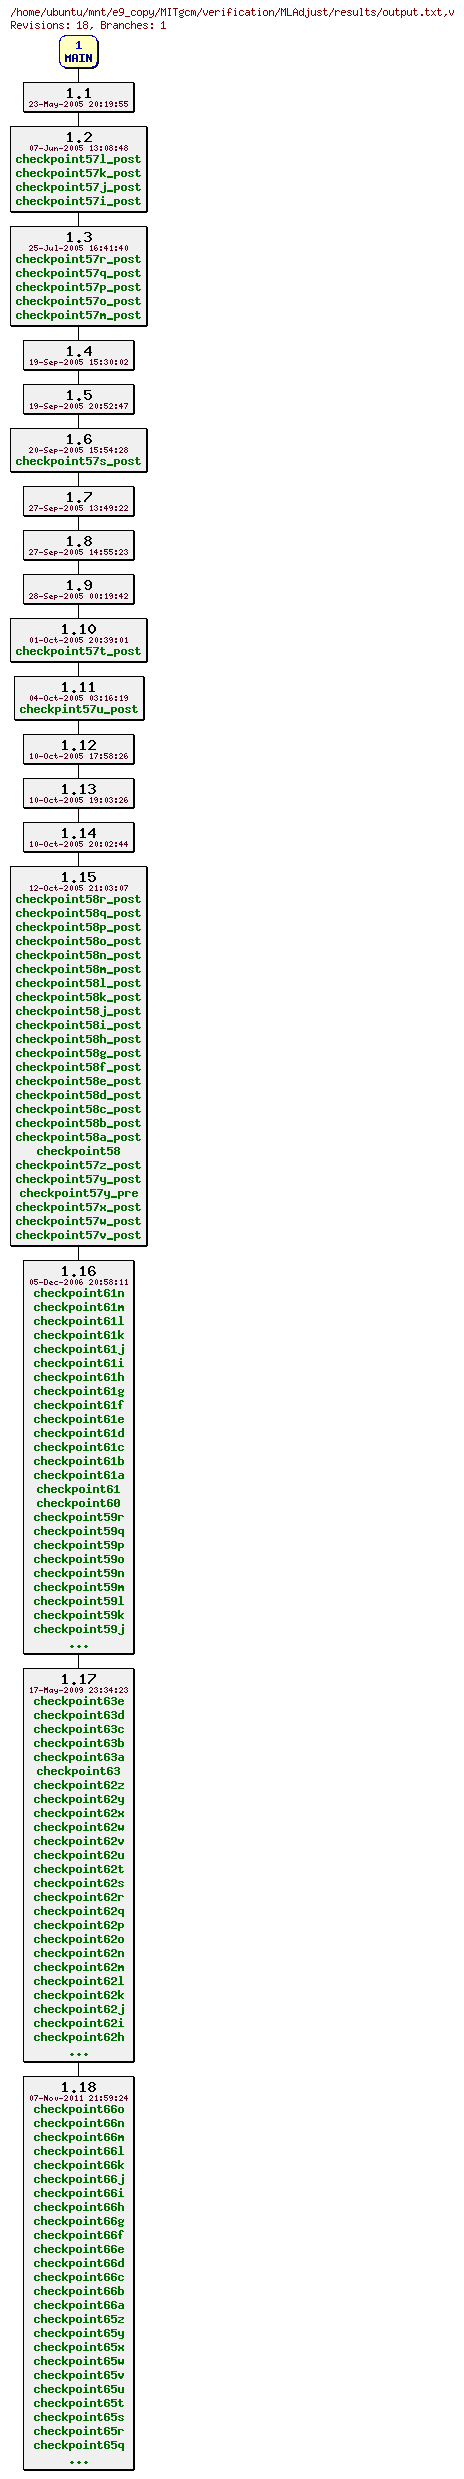 Revisions of MITgcm/verification/MLAdjust/results/output.txt